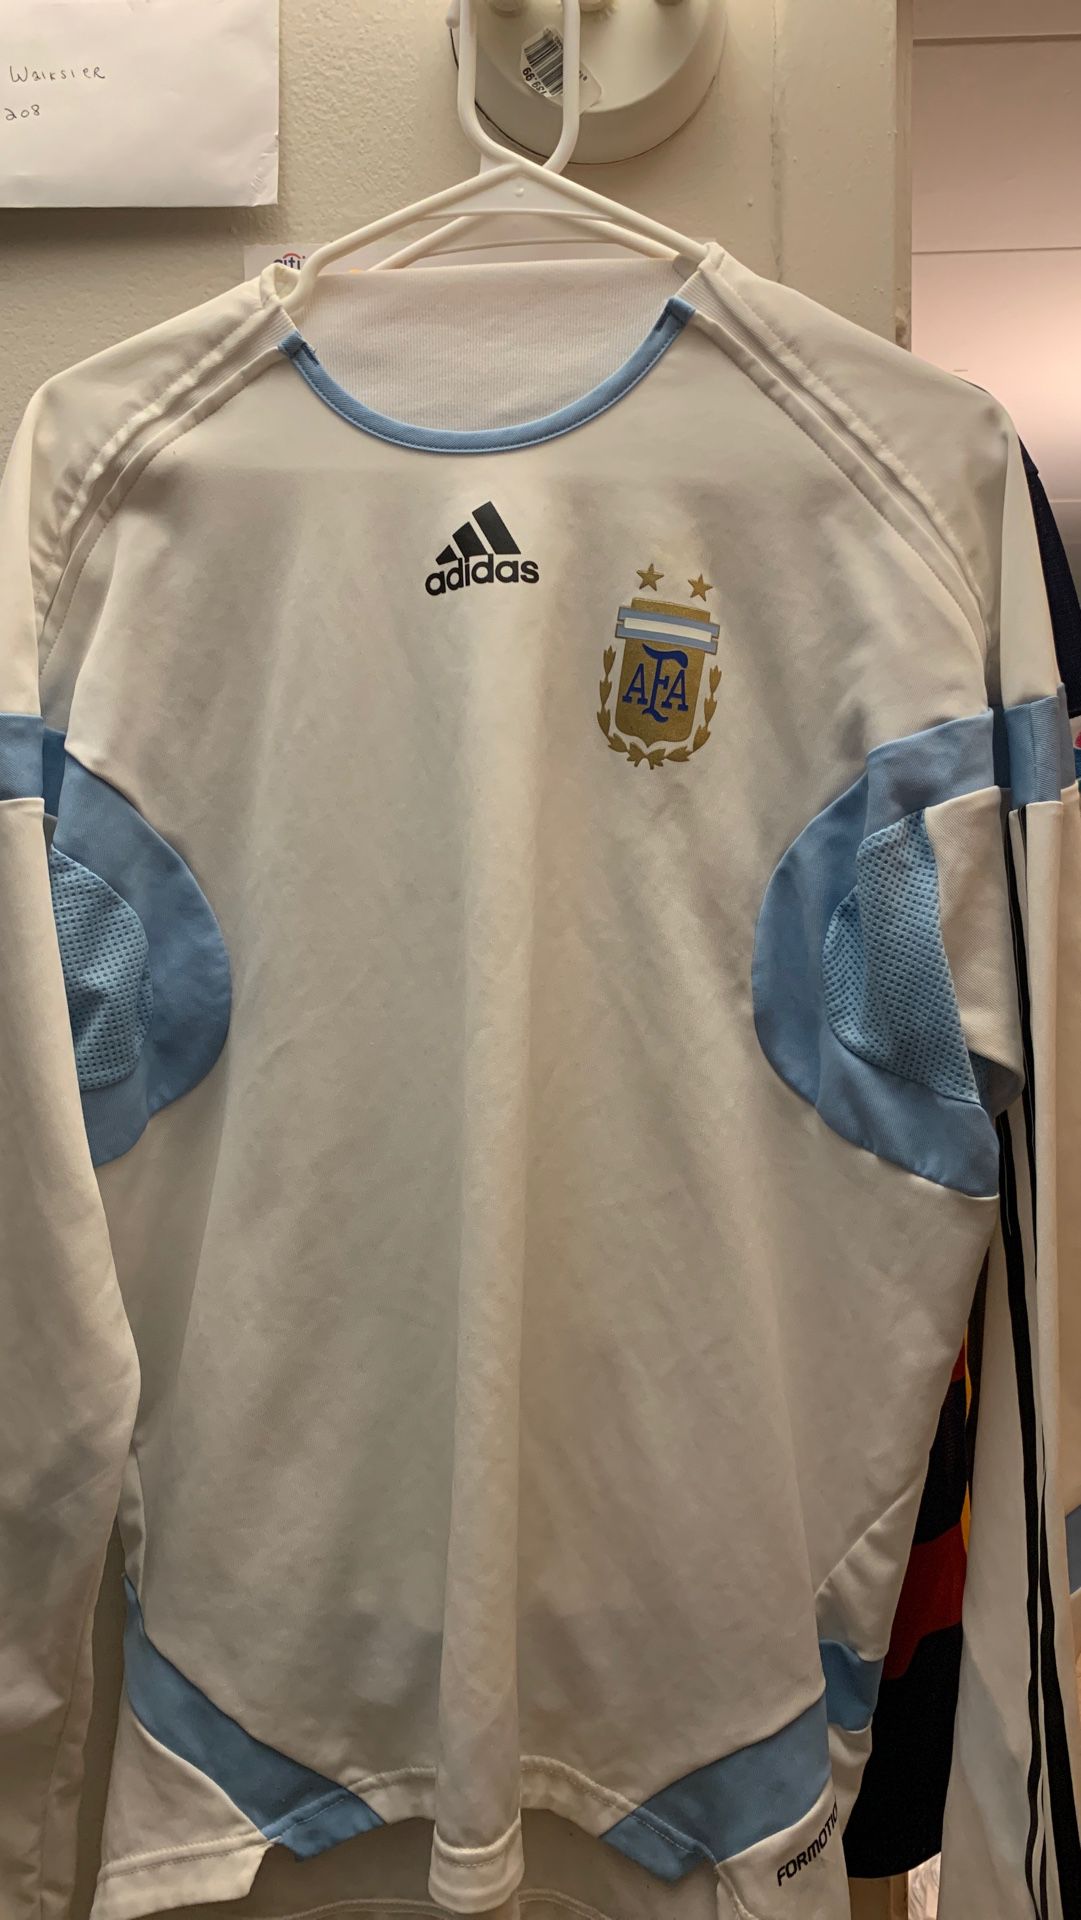 Argentina jersey 30.00